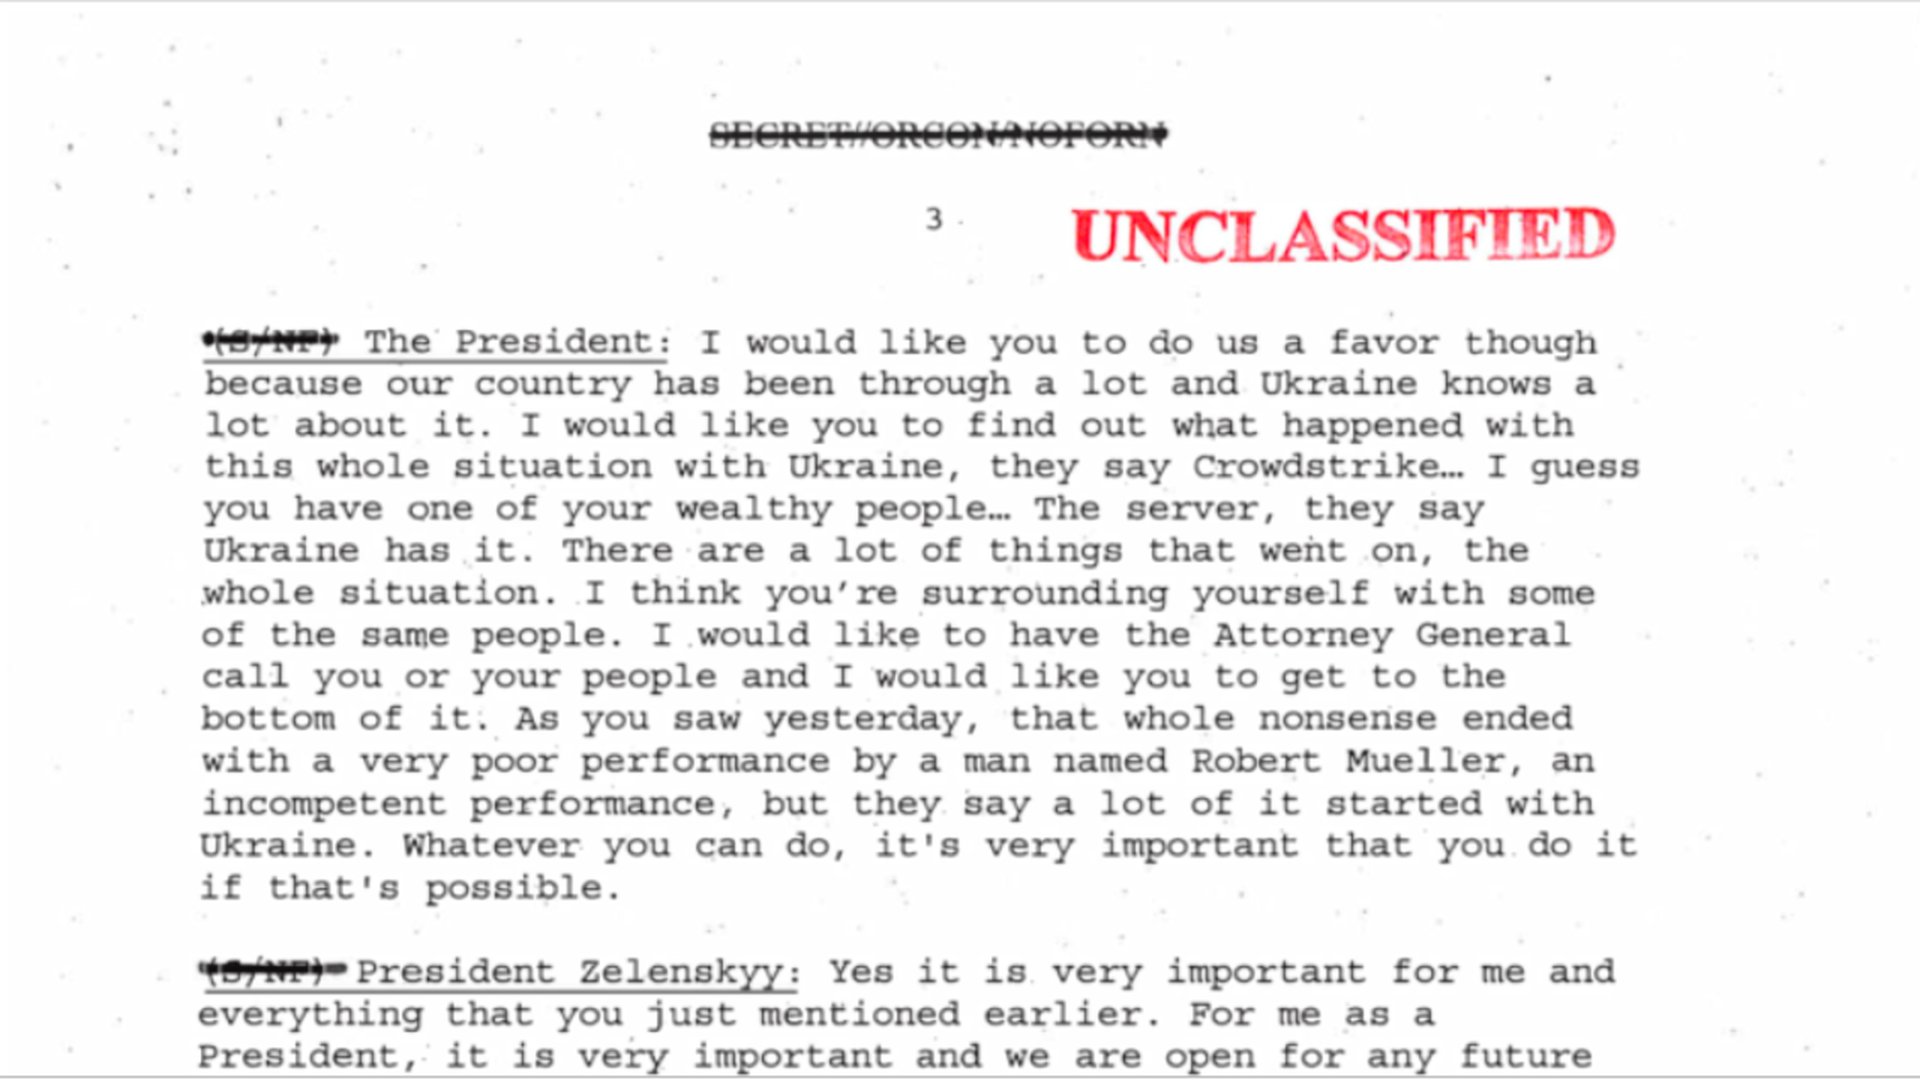 screenshot unclassified document of whistleblower complaint